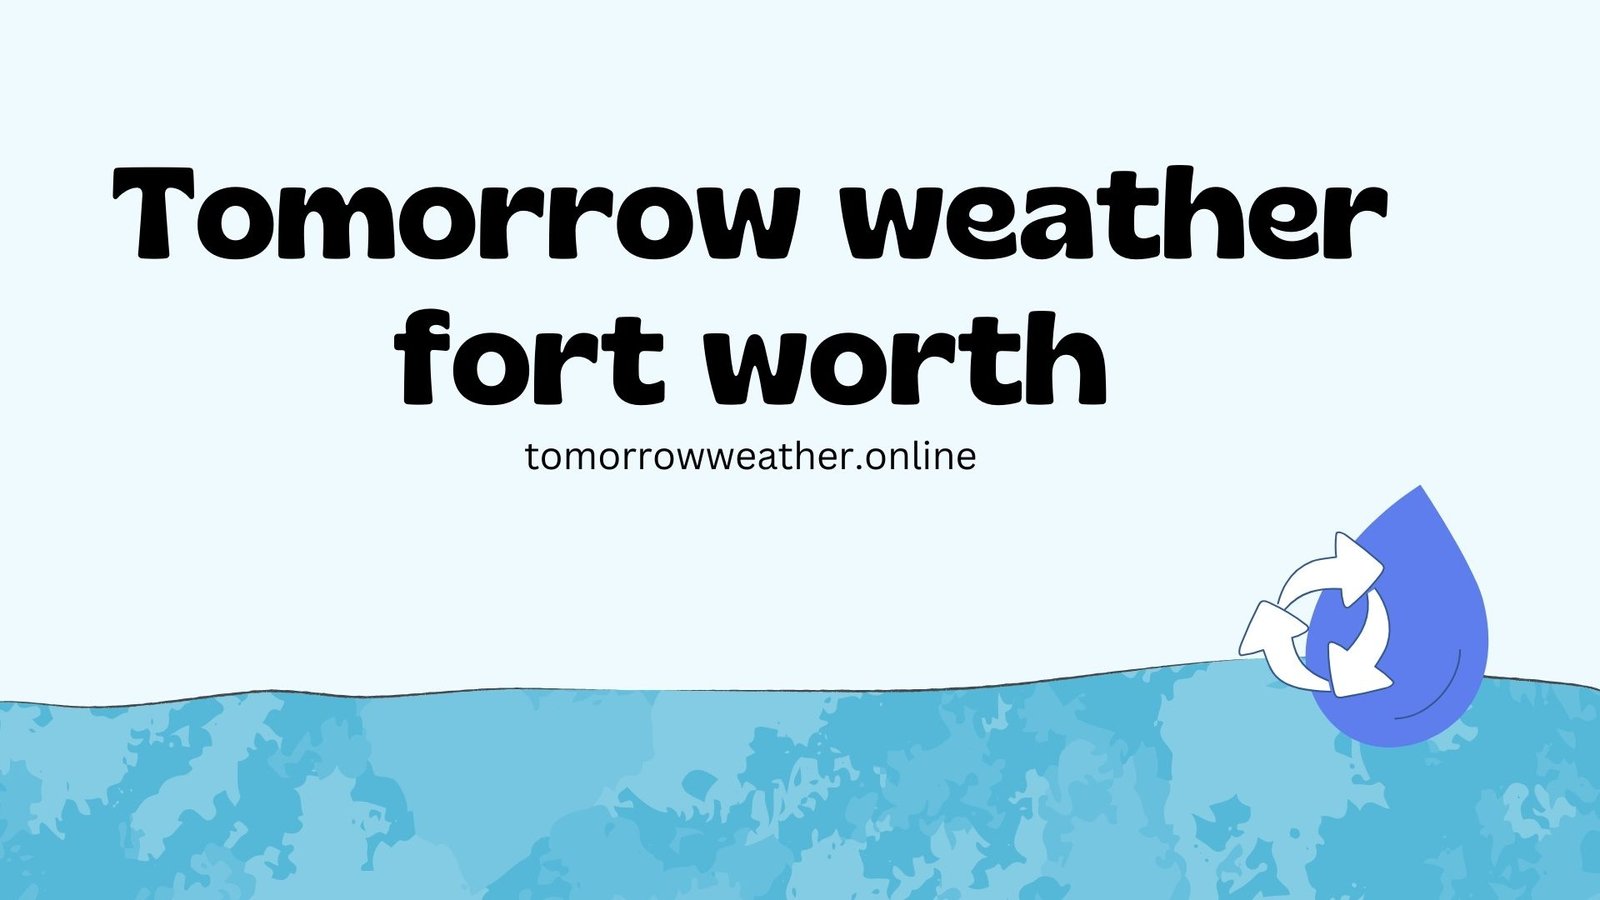 Tomorrow weather fort worth